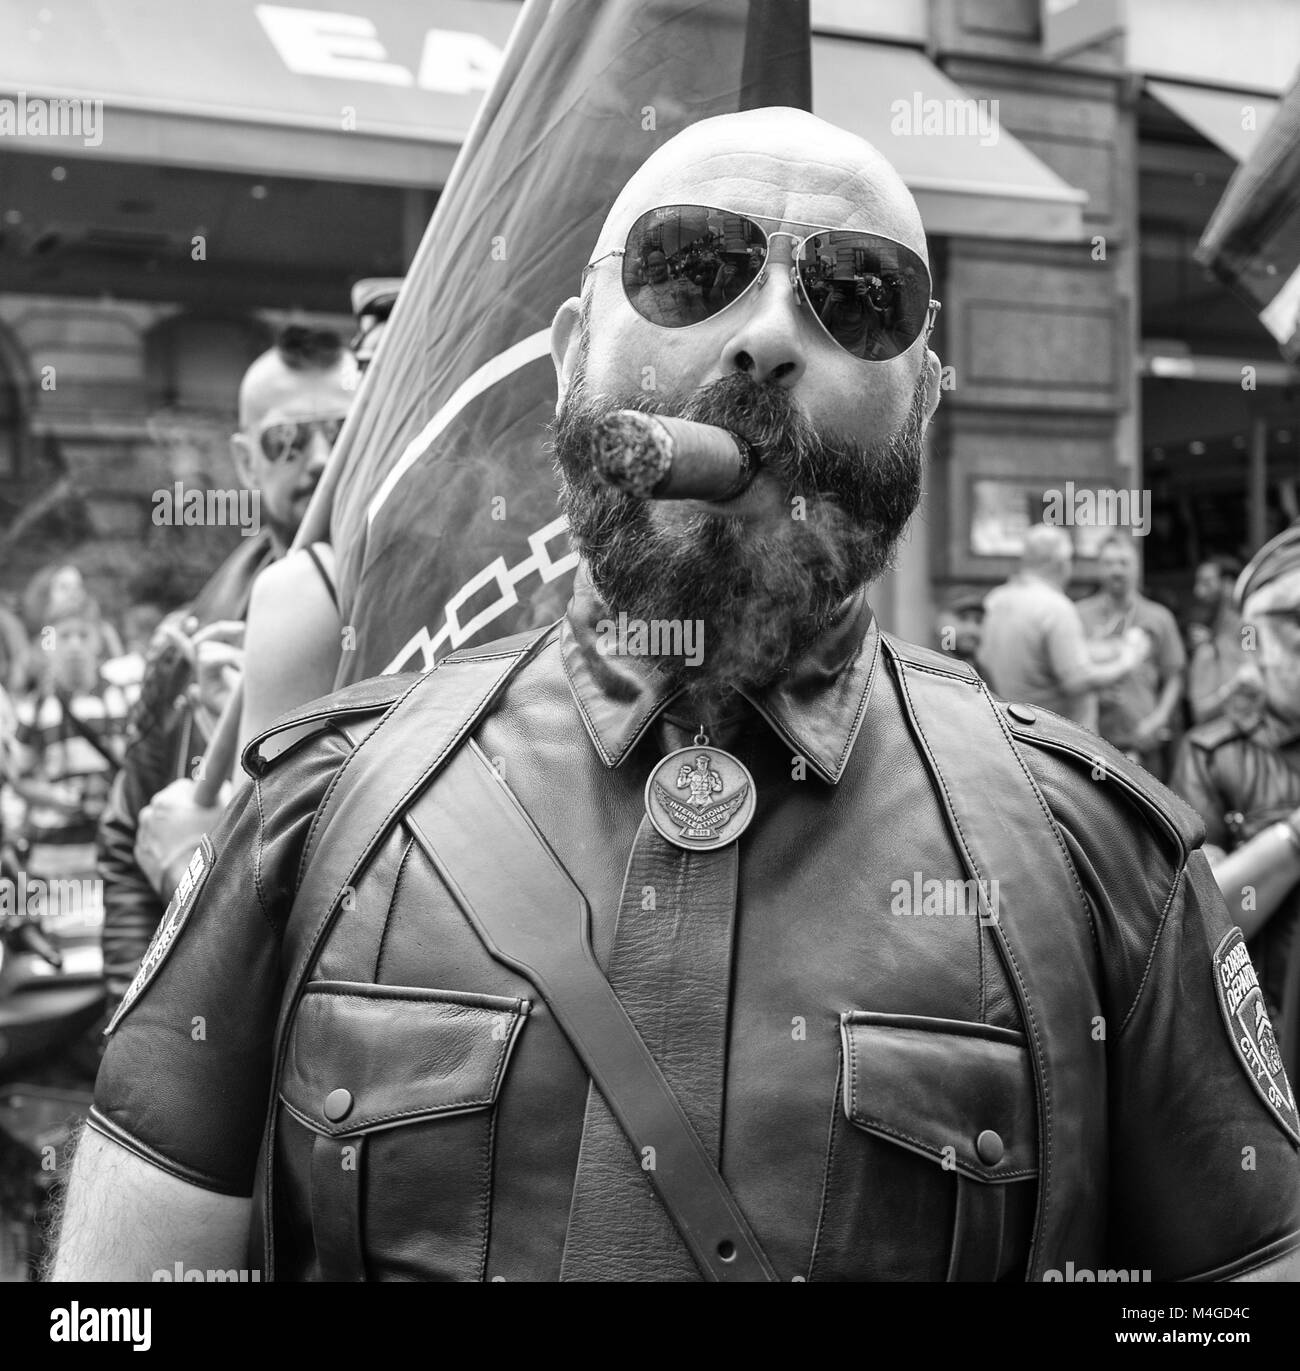 Black & White Photograph of a man smoking his cigar at The Pride in London Parade, London, England, UK. Credit: London Snapper Stock Photo